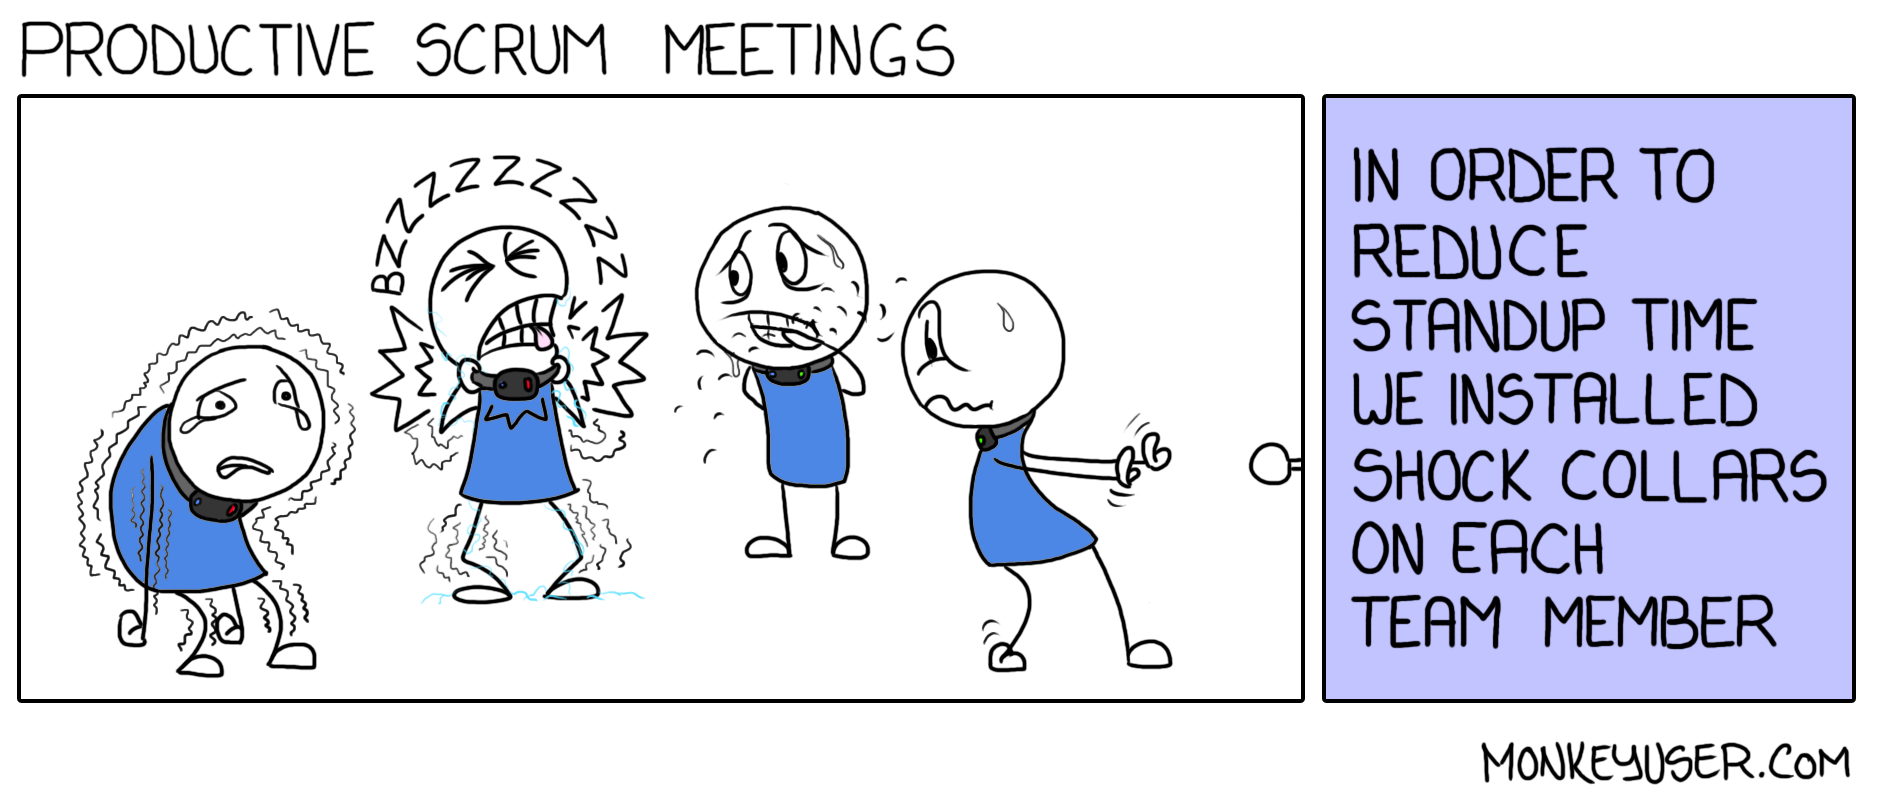 Productive Scrum meeting